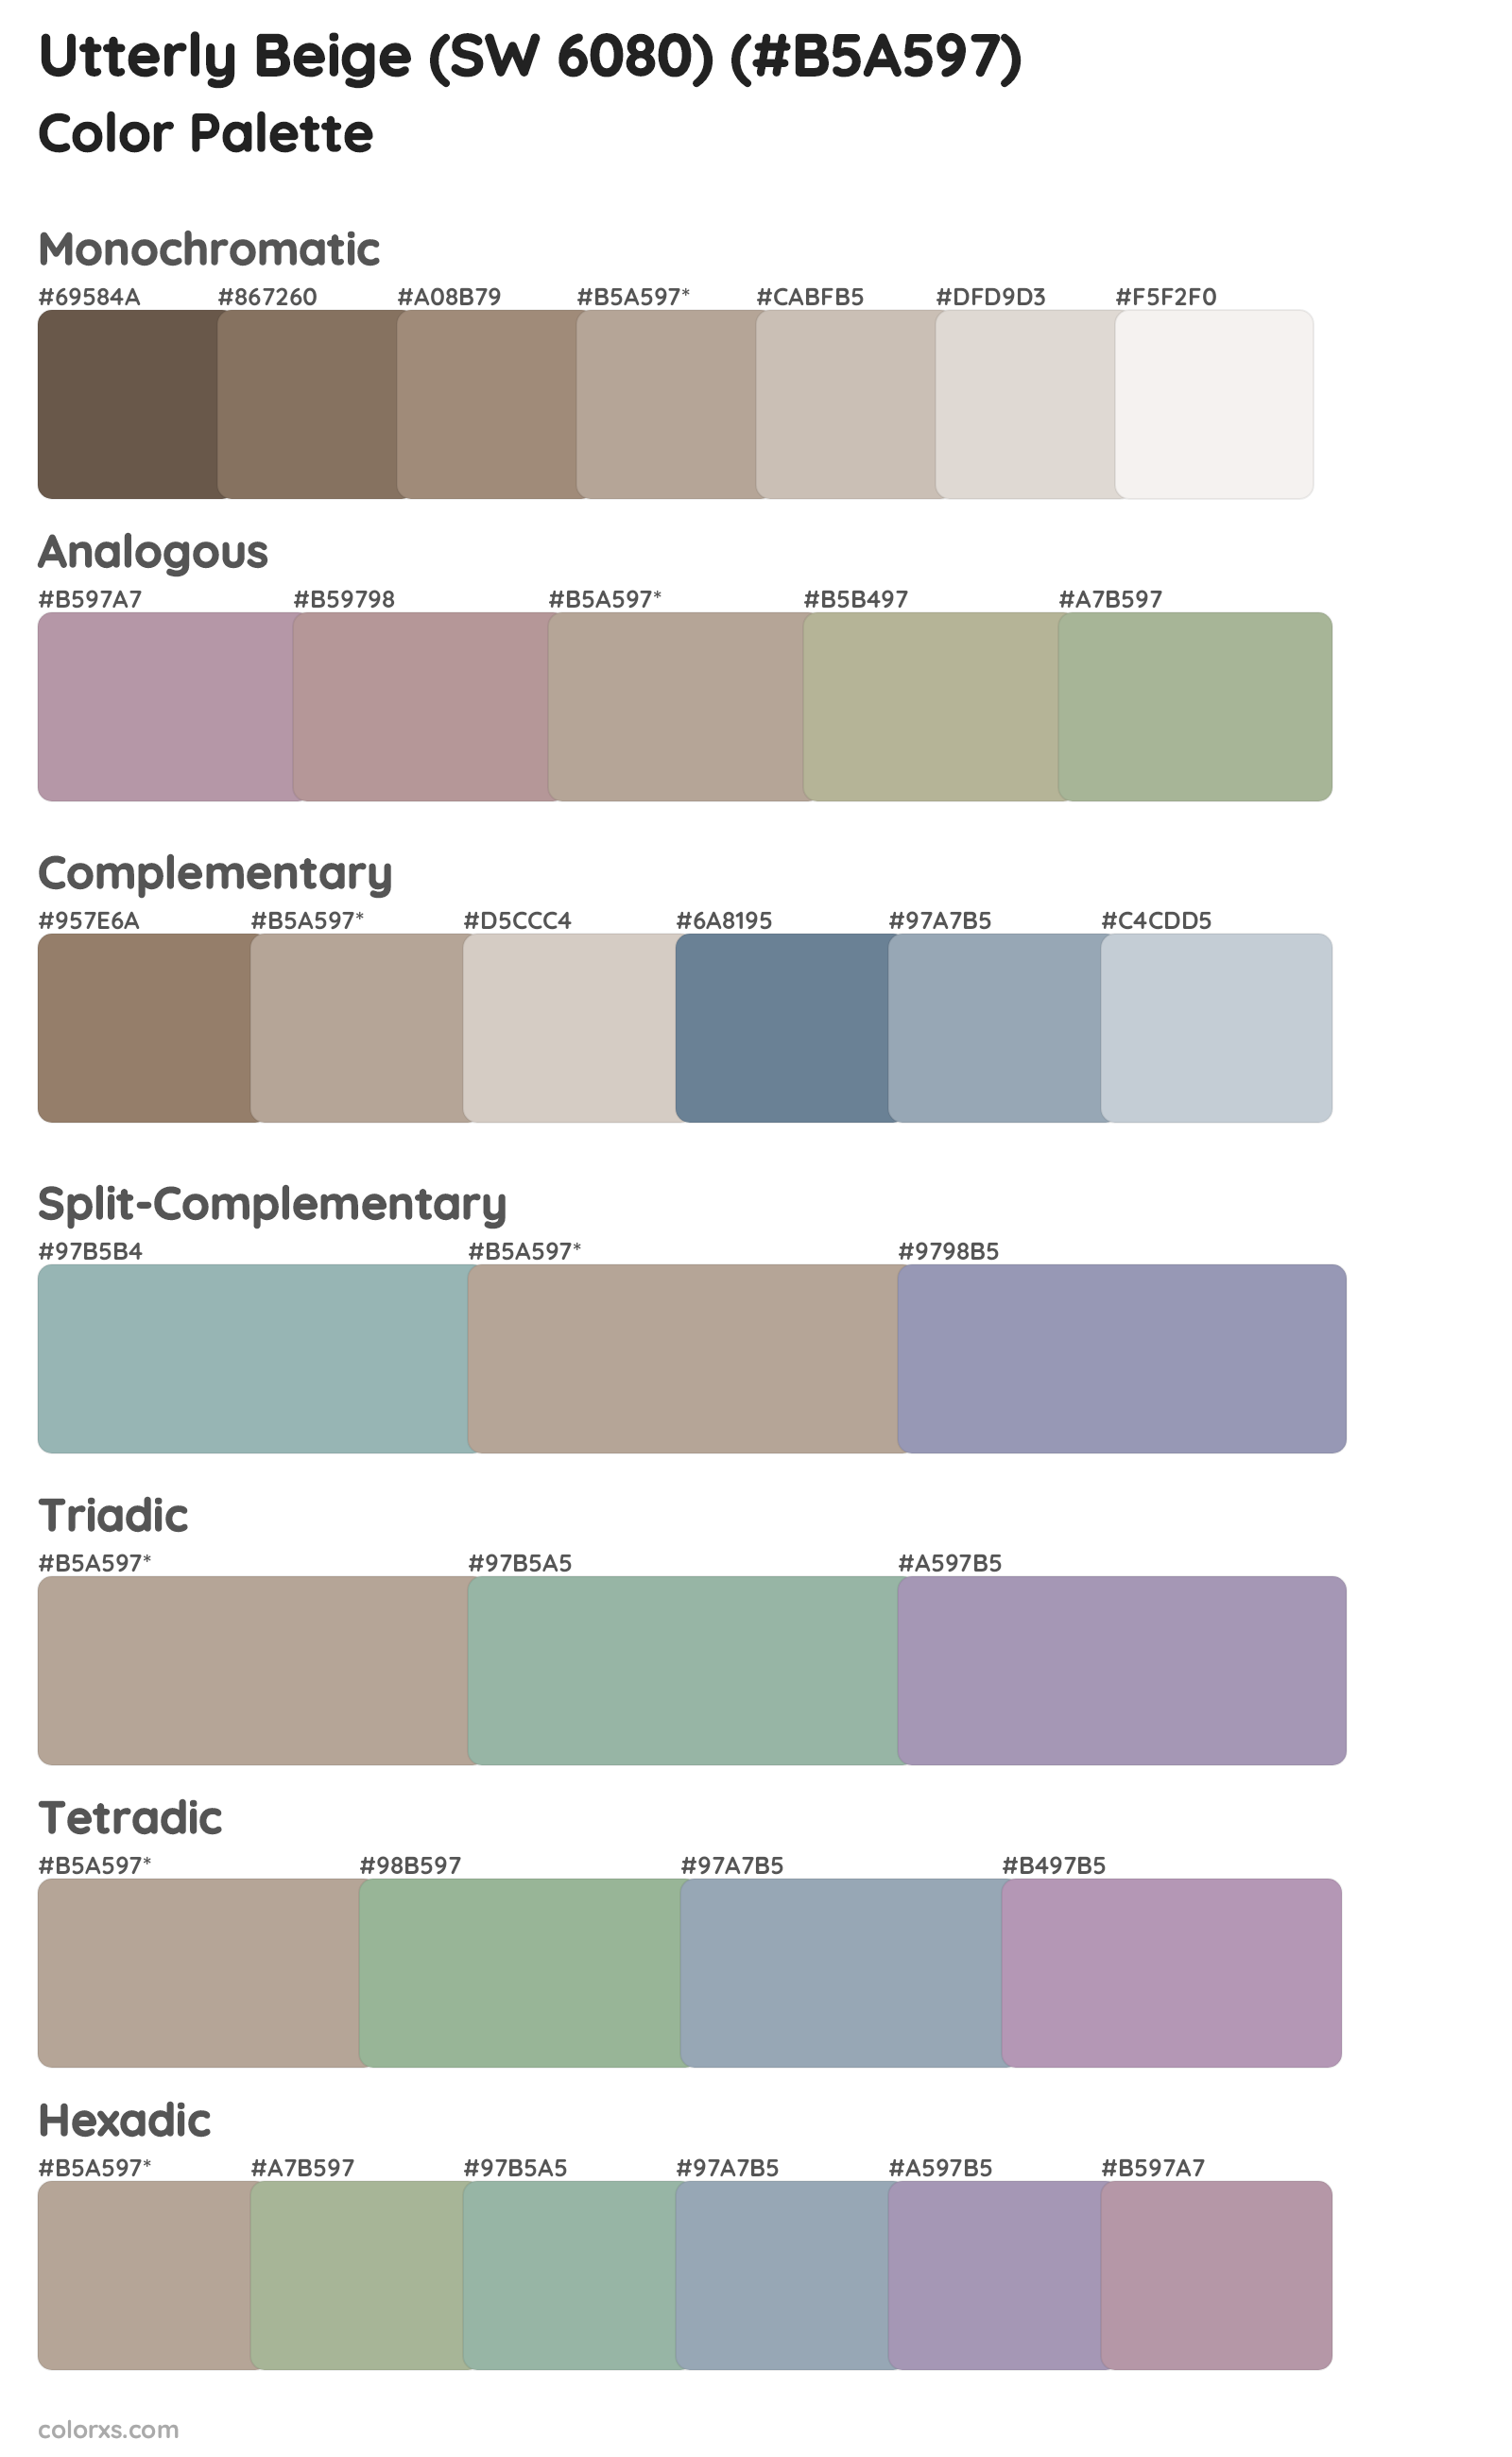 Utterly Beige (SW 6080) Color Scheme Palettes